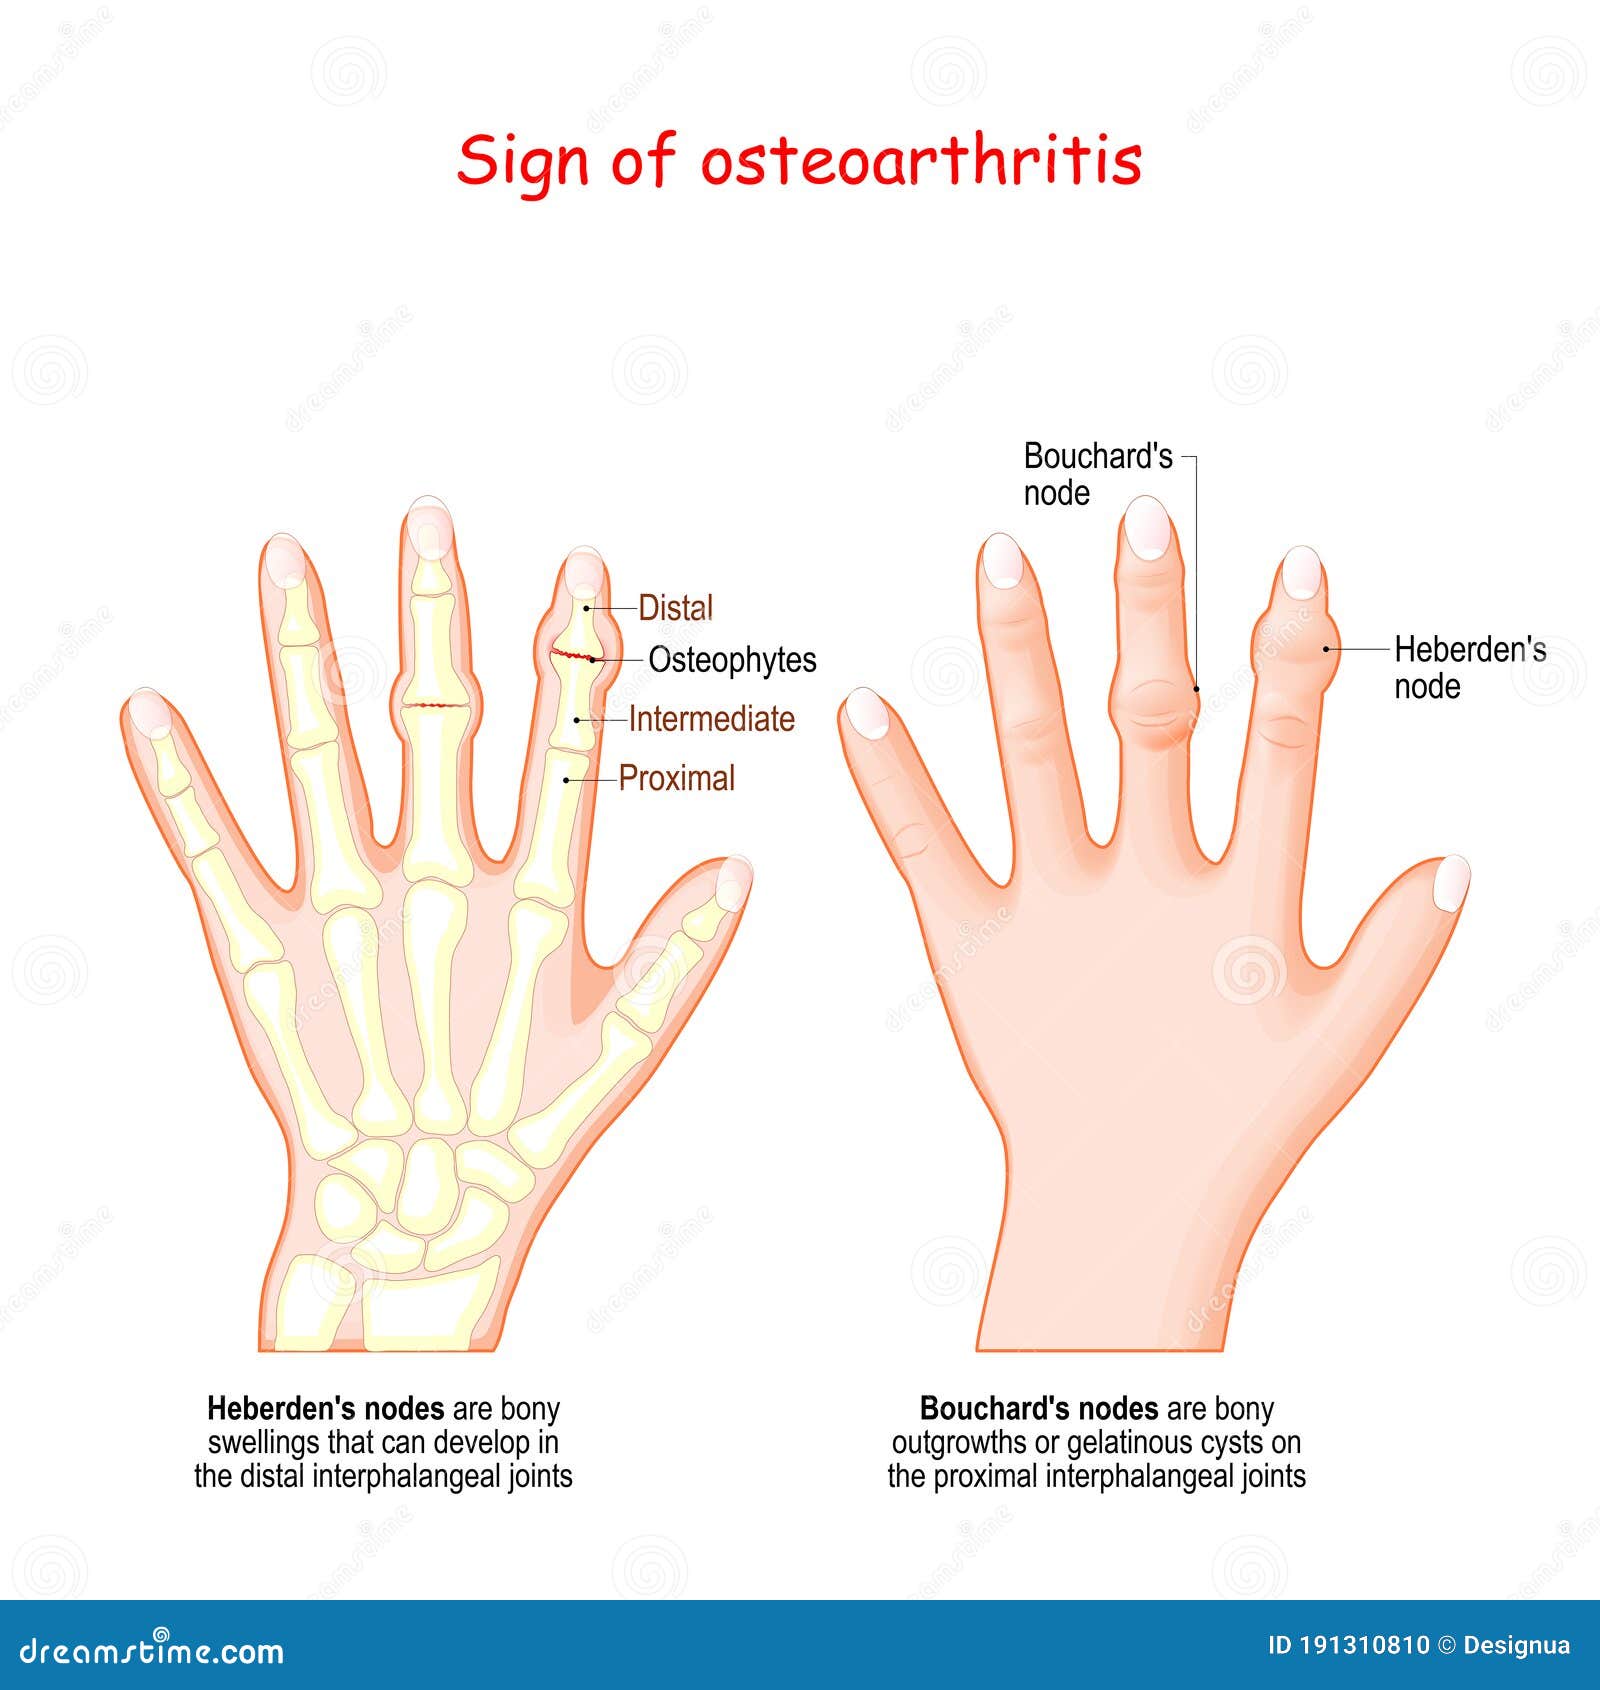 https://thumbs.dreamstime.com/z/sign-osteoarthritis-human-hand-heberden-s-node-bouchard-s-node-sign-osteoarthritis-human-hand-heberden-s-node-191310810.jpg